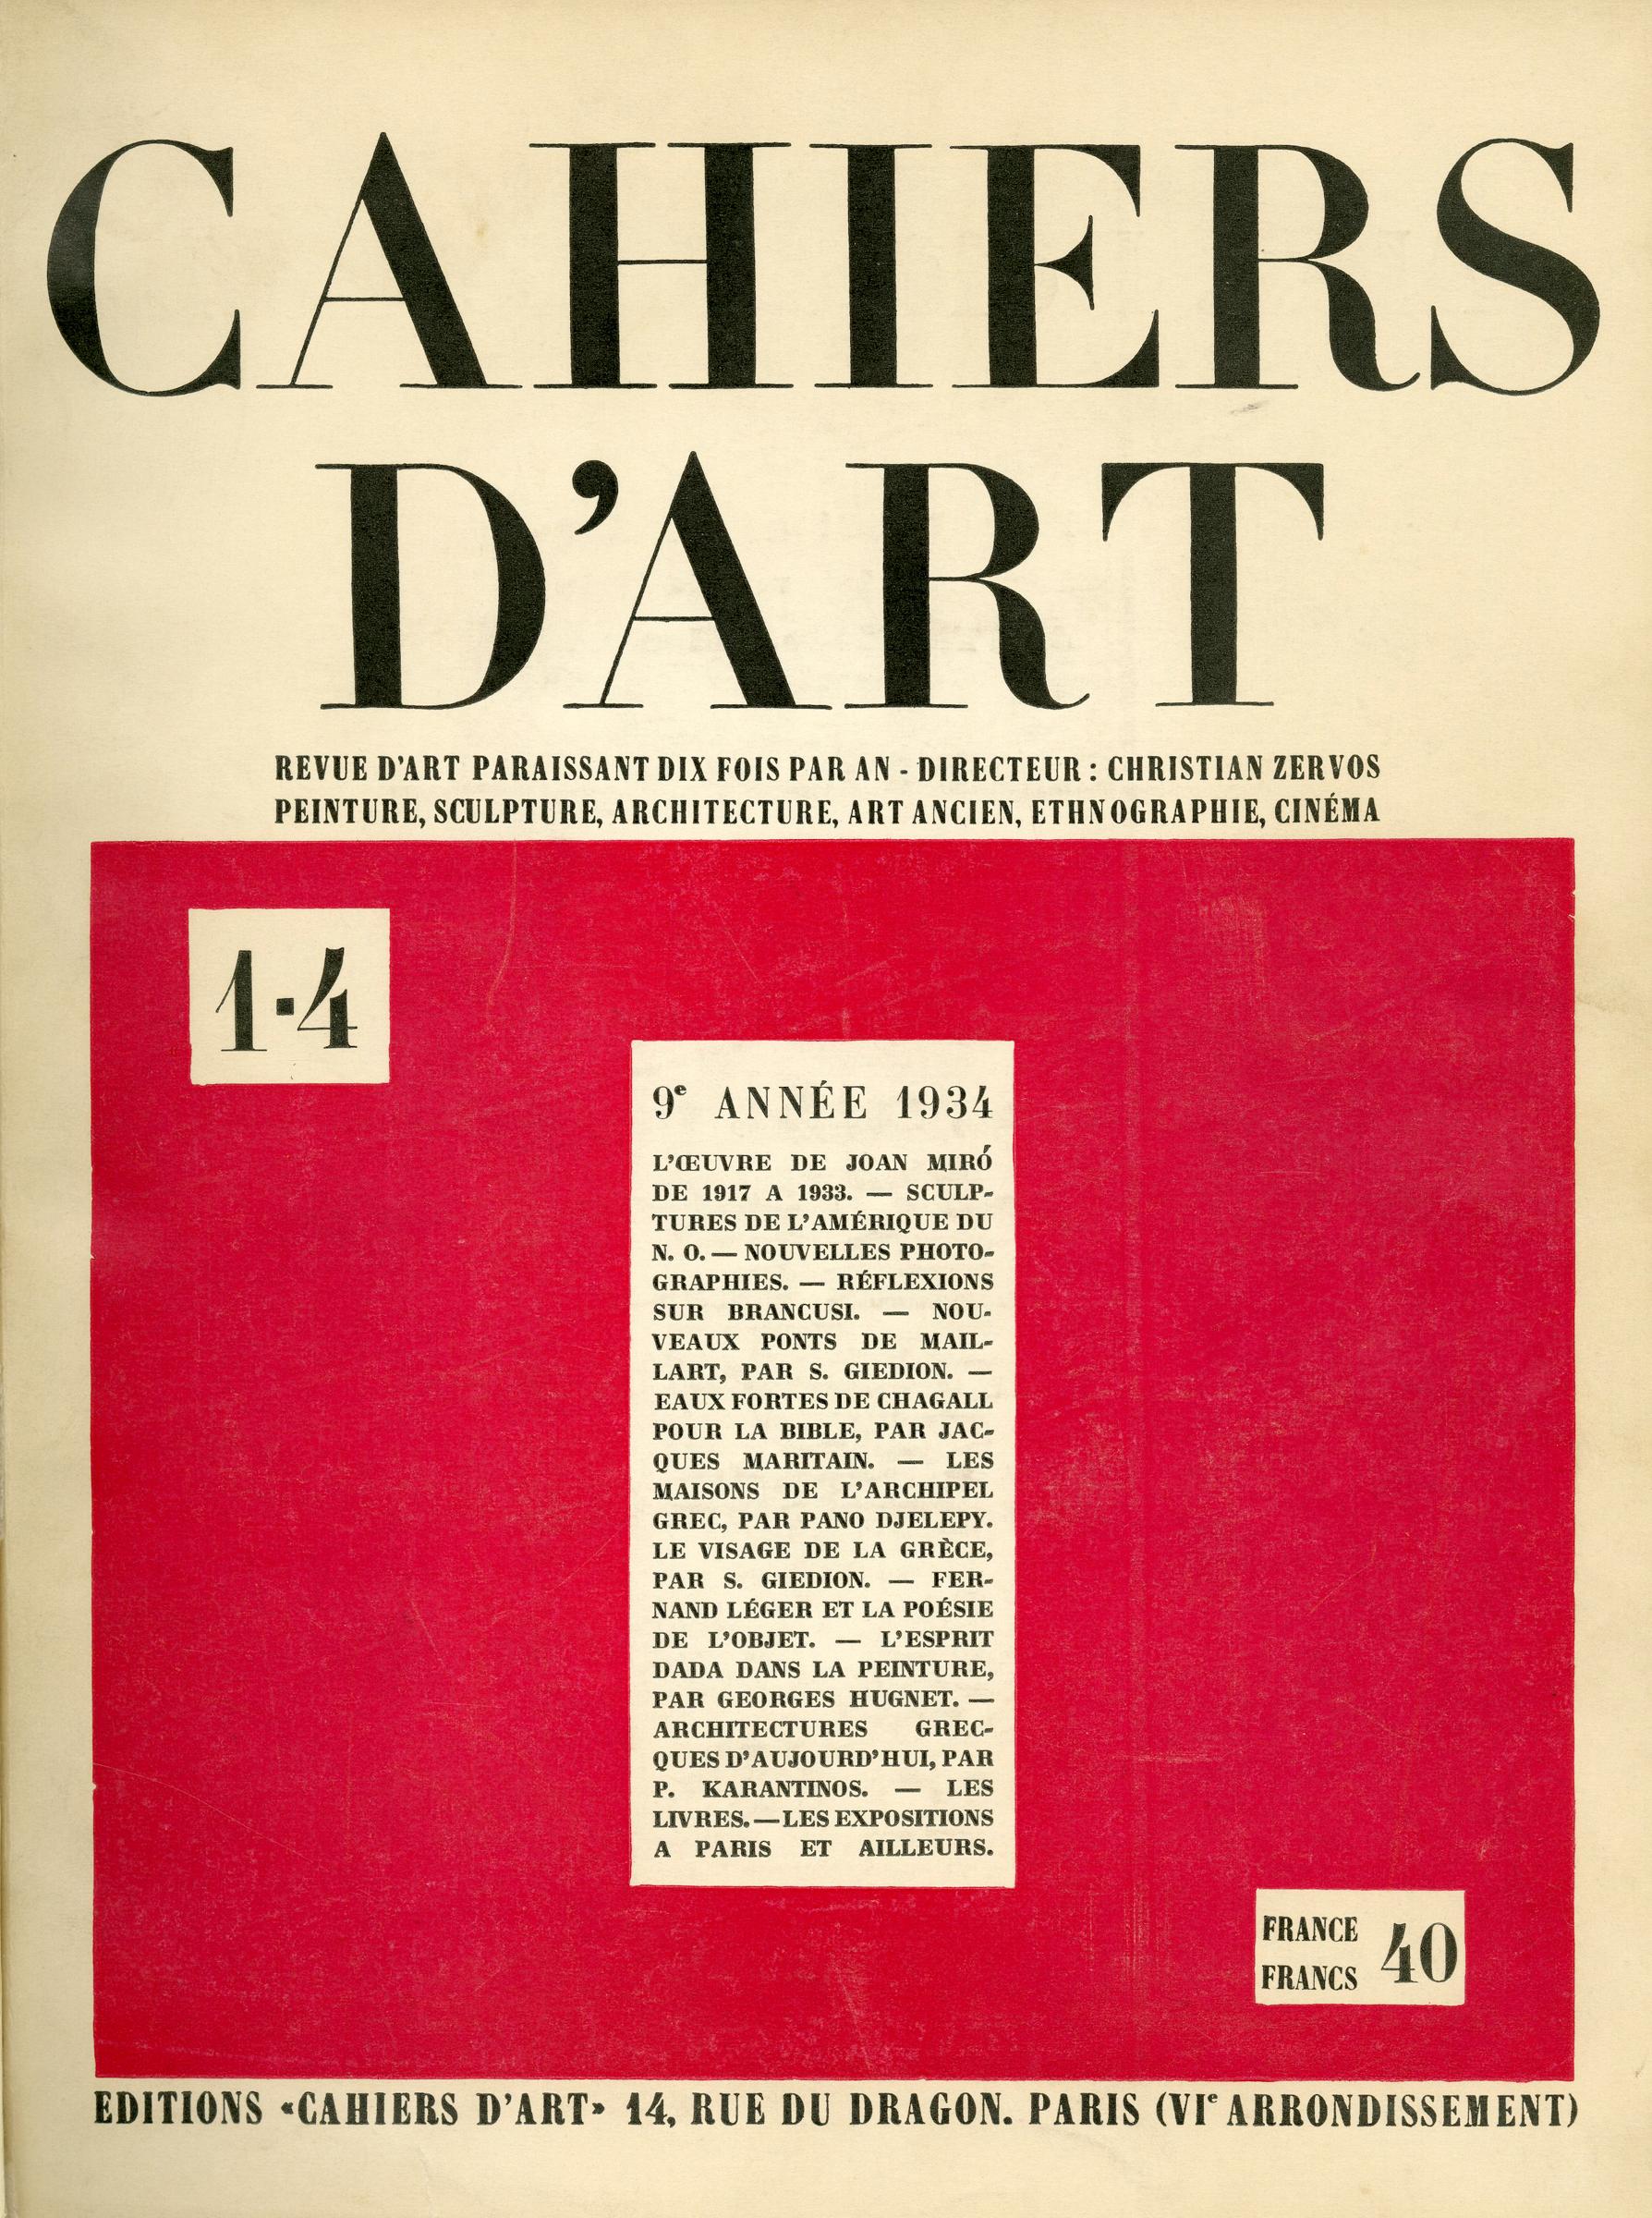 Cahiers d'art II/Surrealist Composition II - Purple Abstract Print by Joan Miró